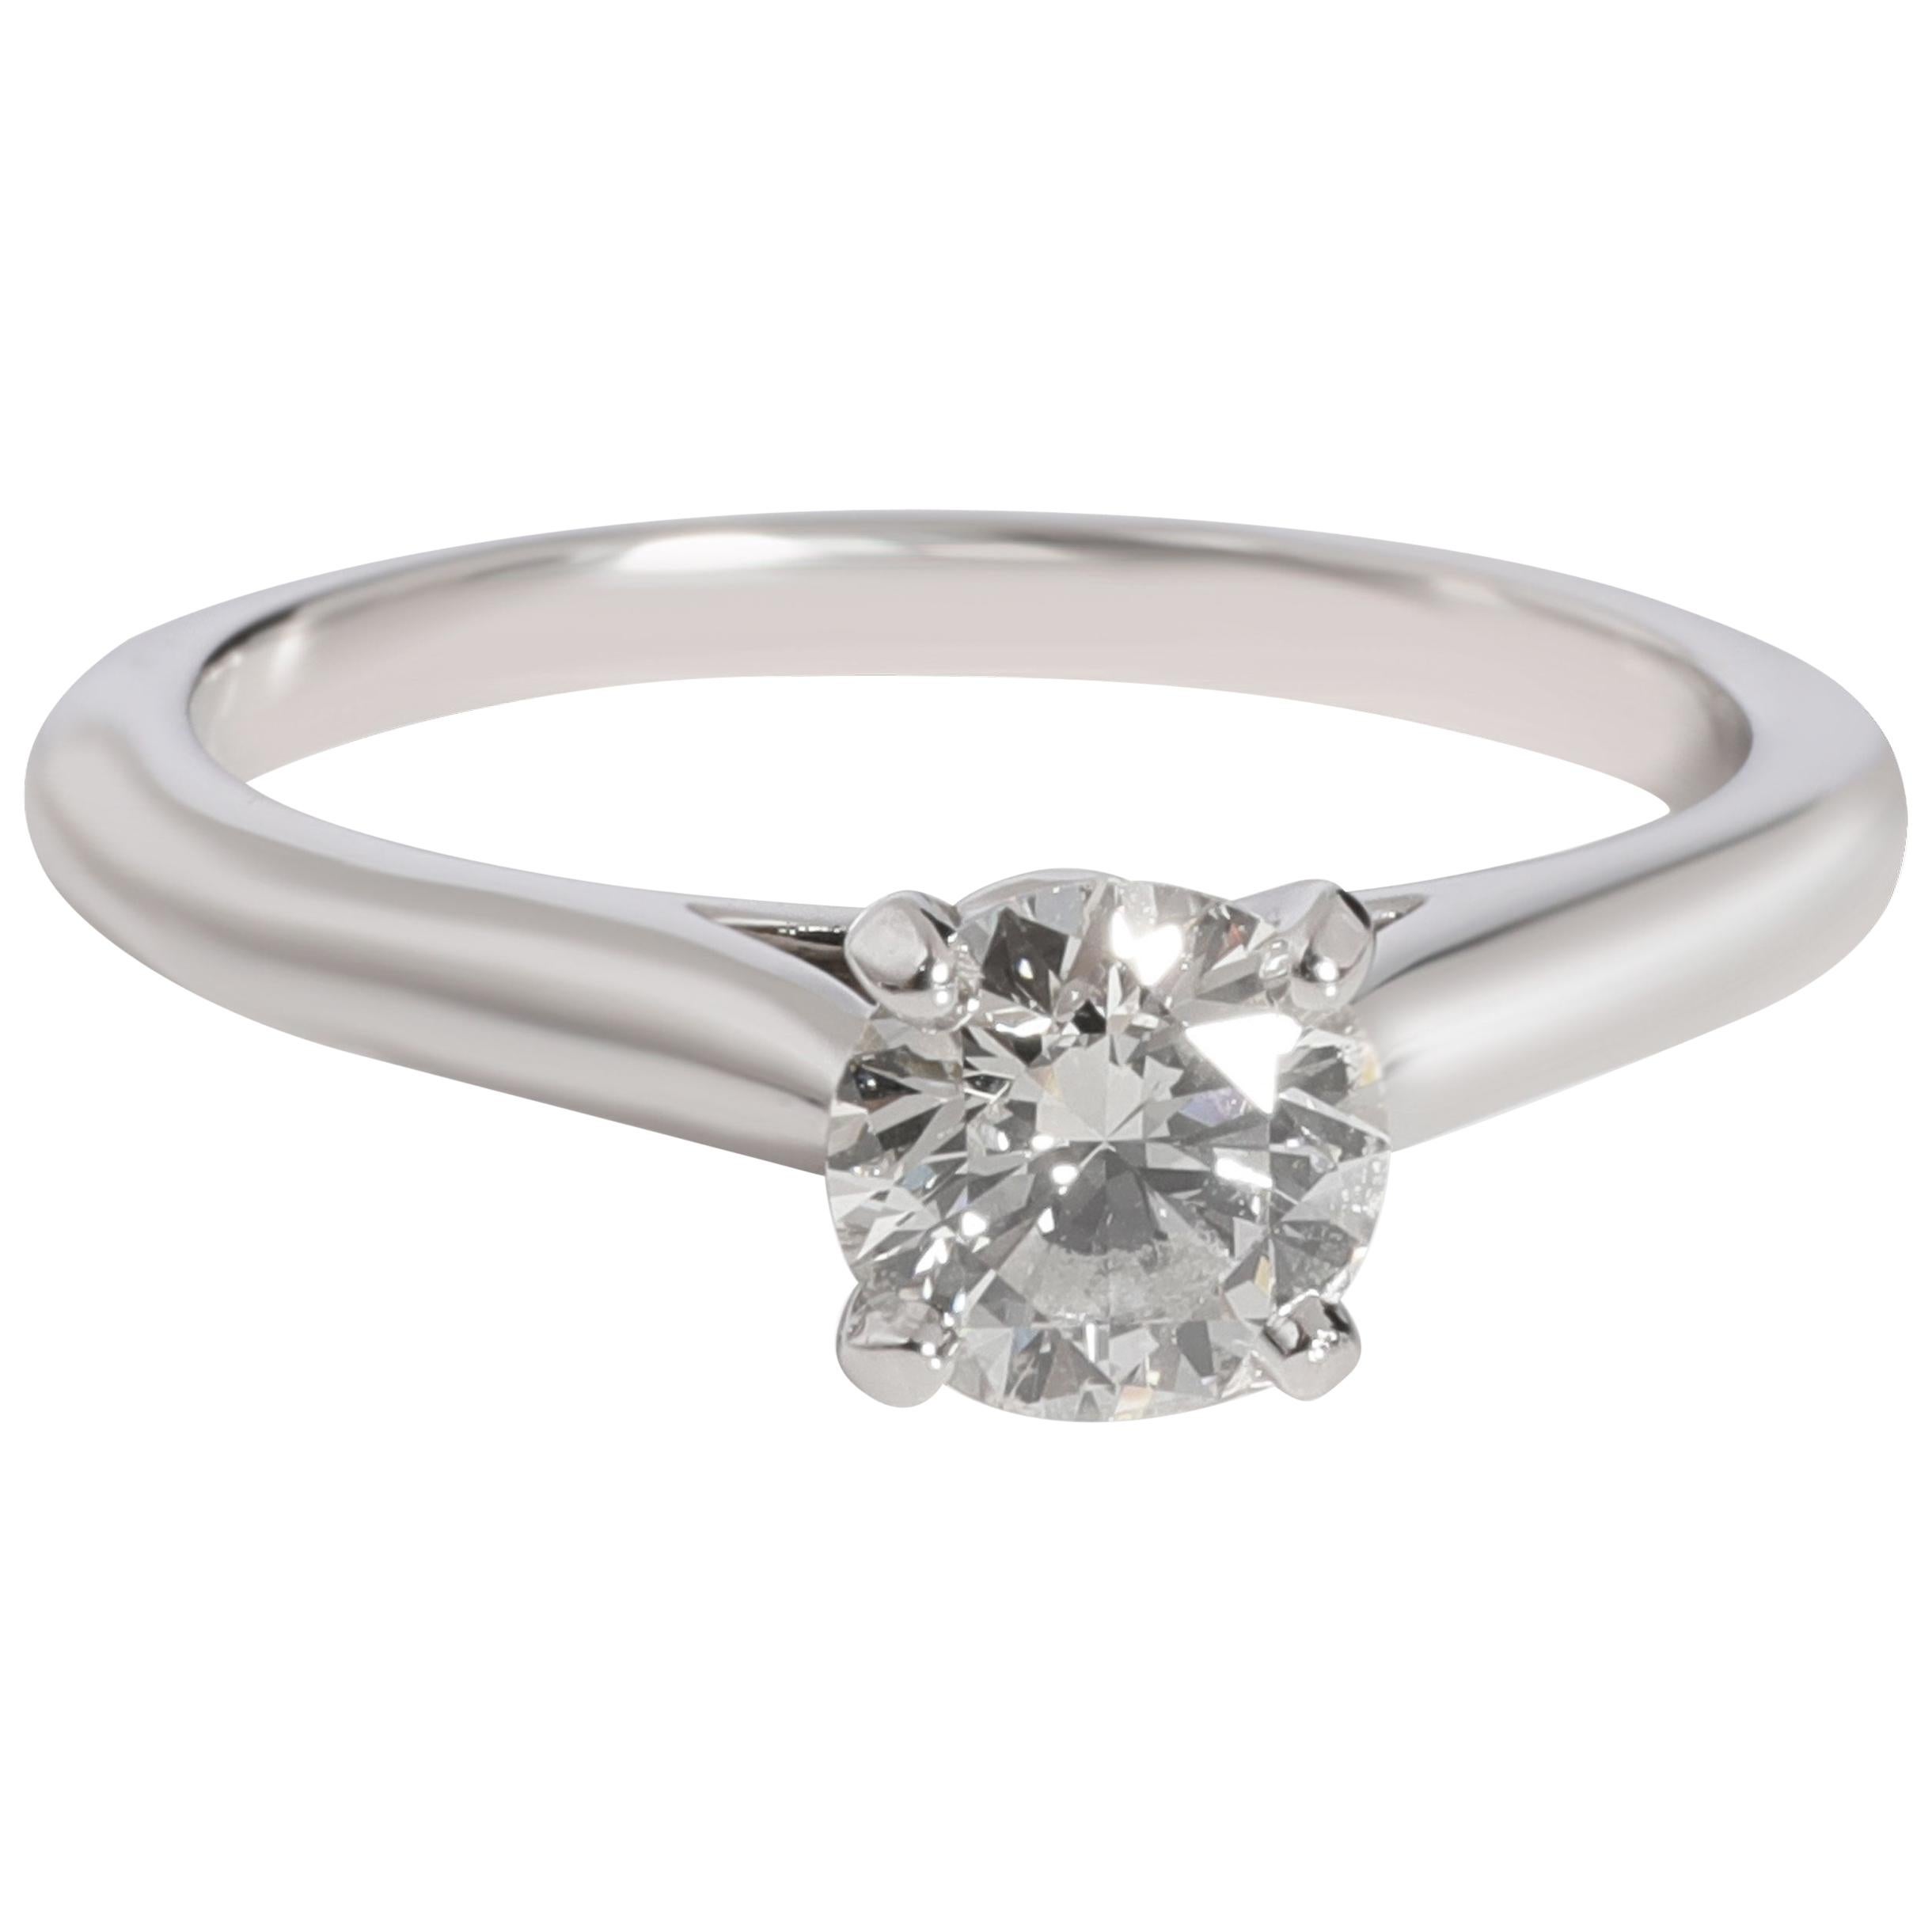 Cartier 1895 Diamond Solitaire Engagement Ring in Platinum H VVS2 0.74 Carat